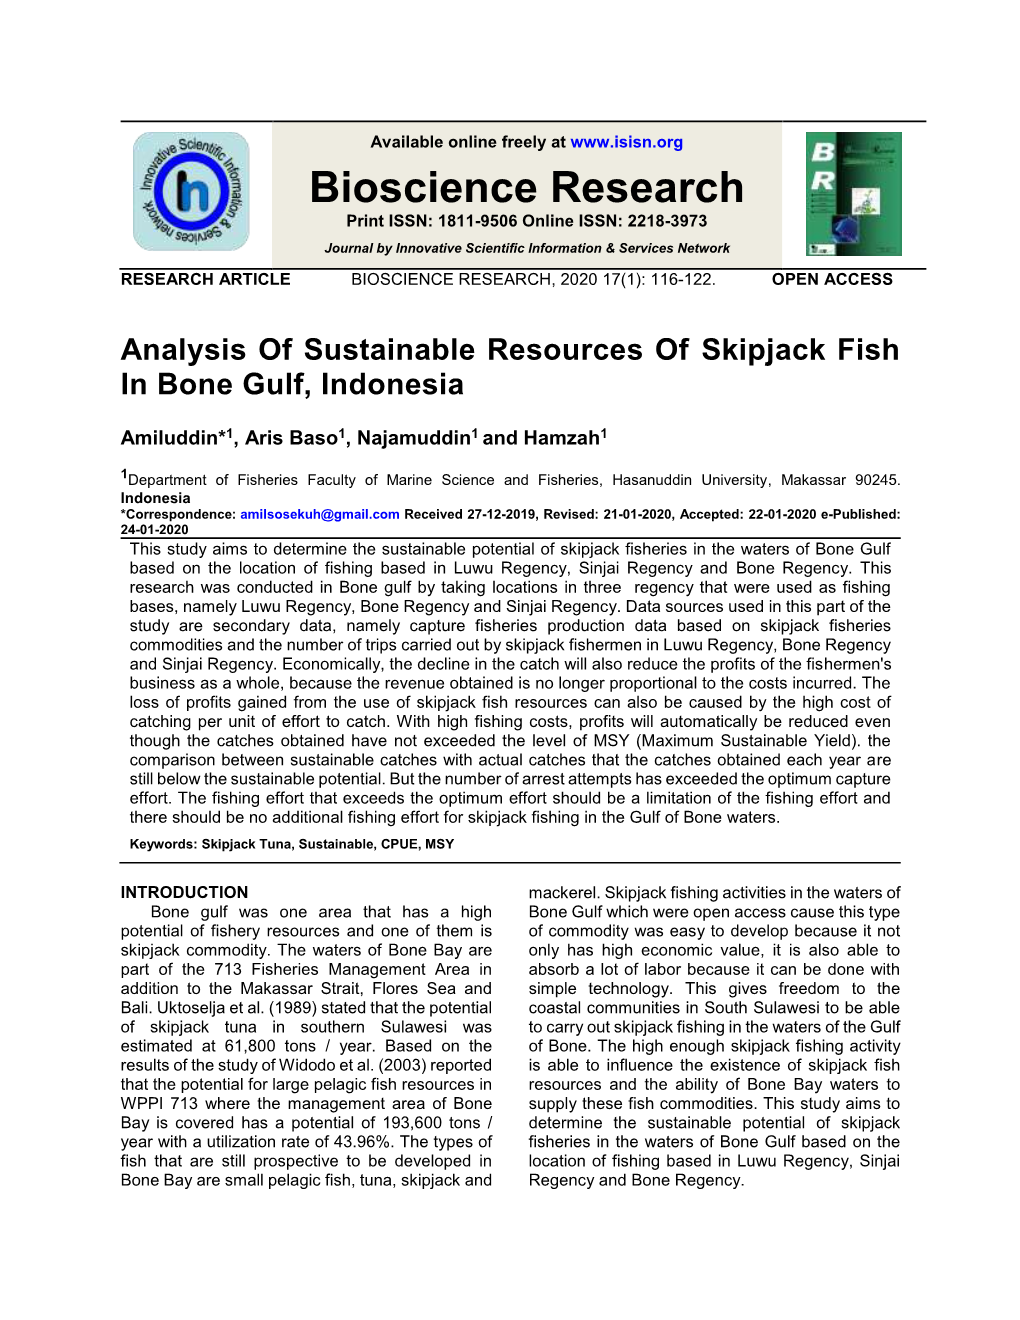 Amiluddin Et Al., Sustainable Resources of Skipjack Fish in Bone Gulf